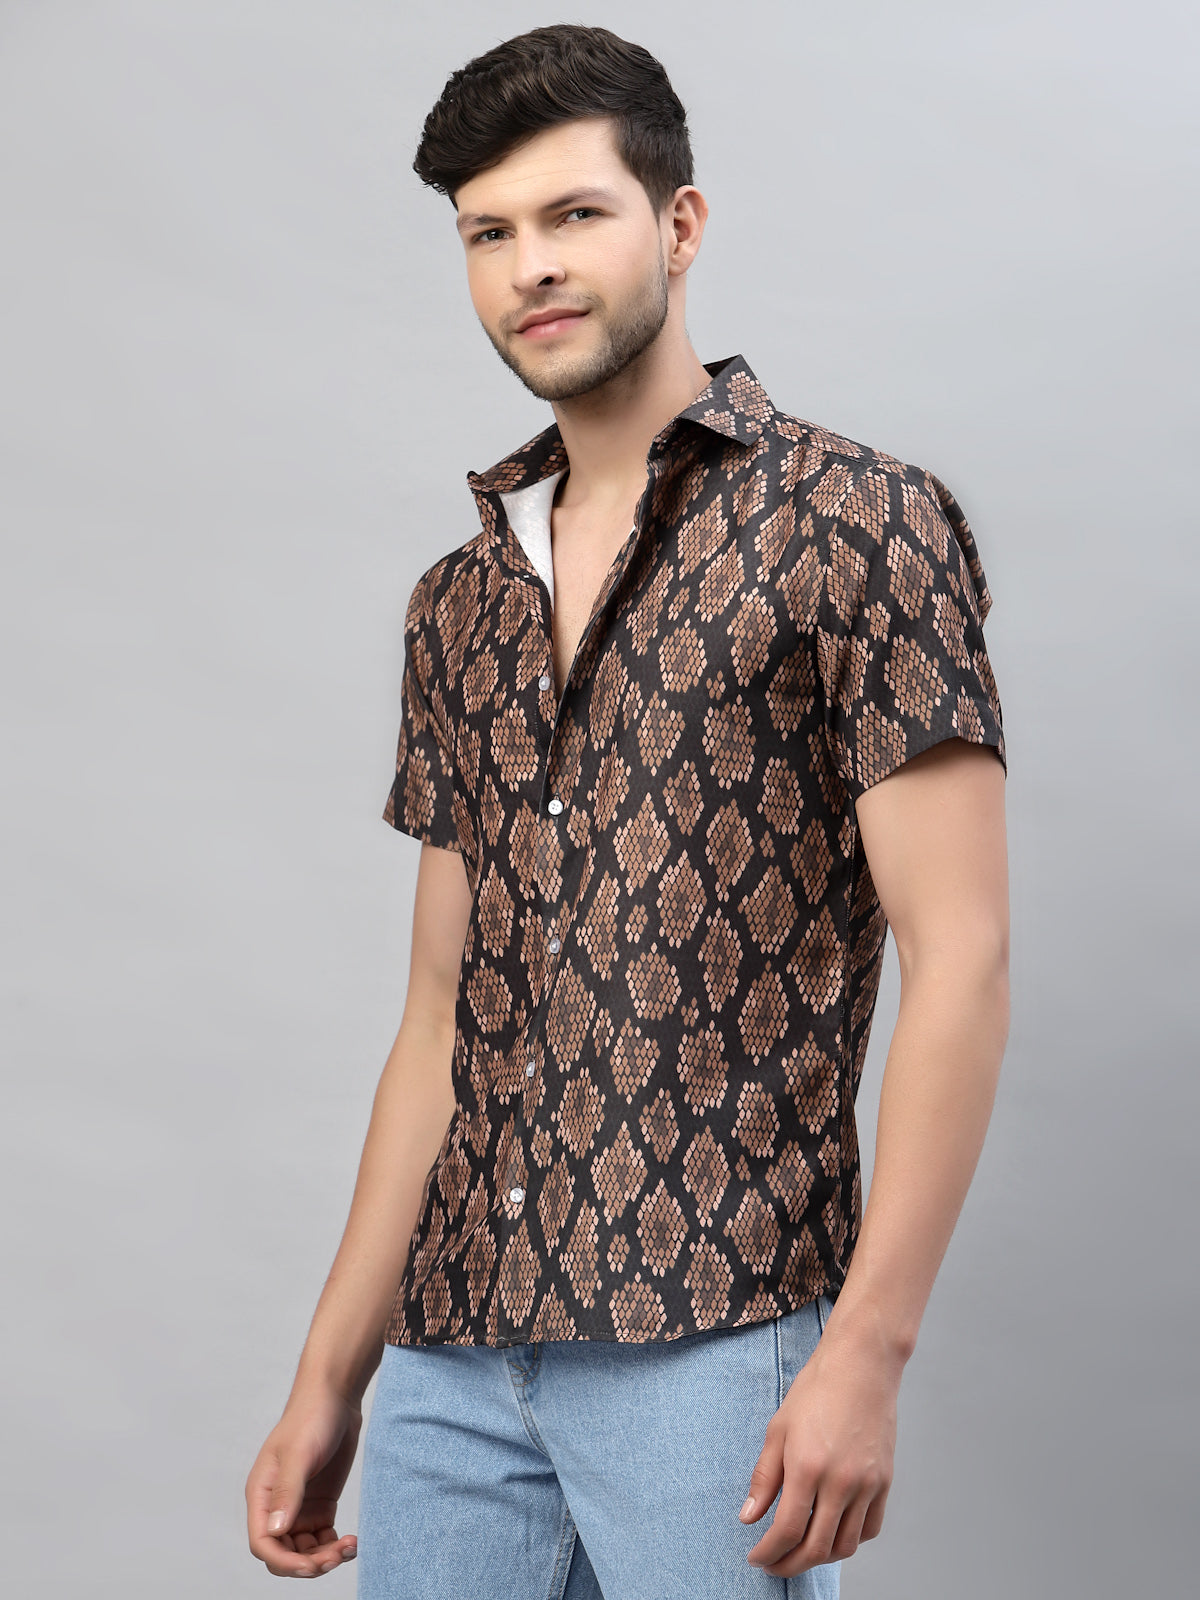 Brown Snake Skin Print Half Sleeve Shirt By Gavin Paris